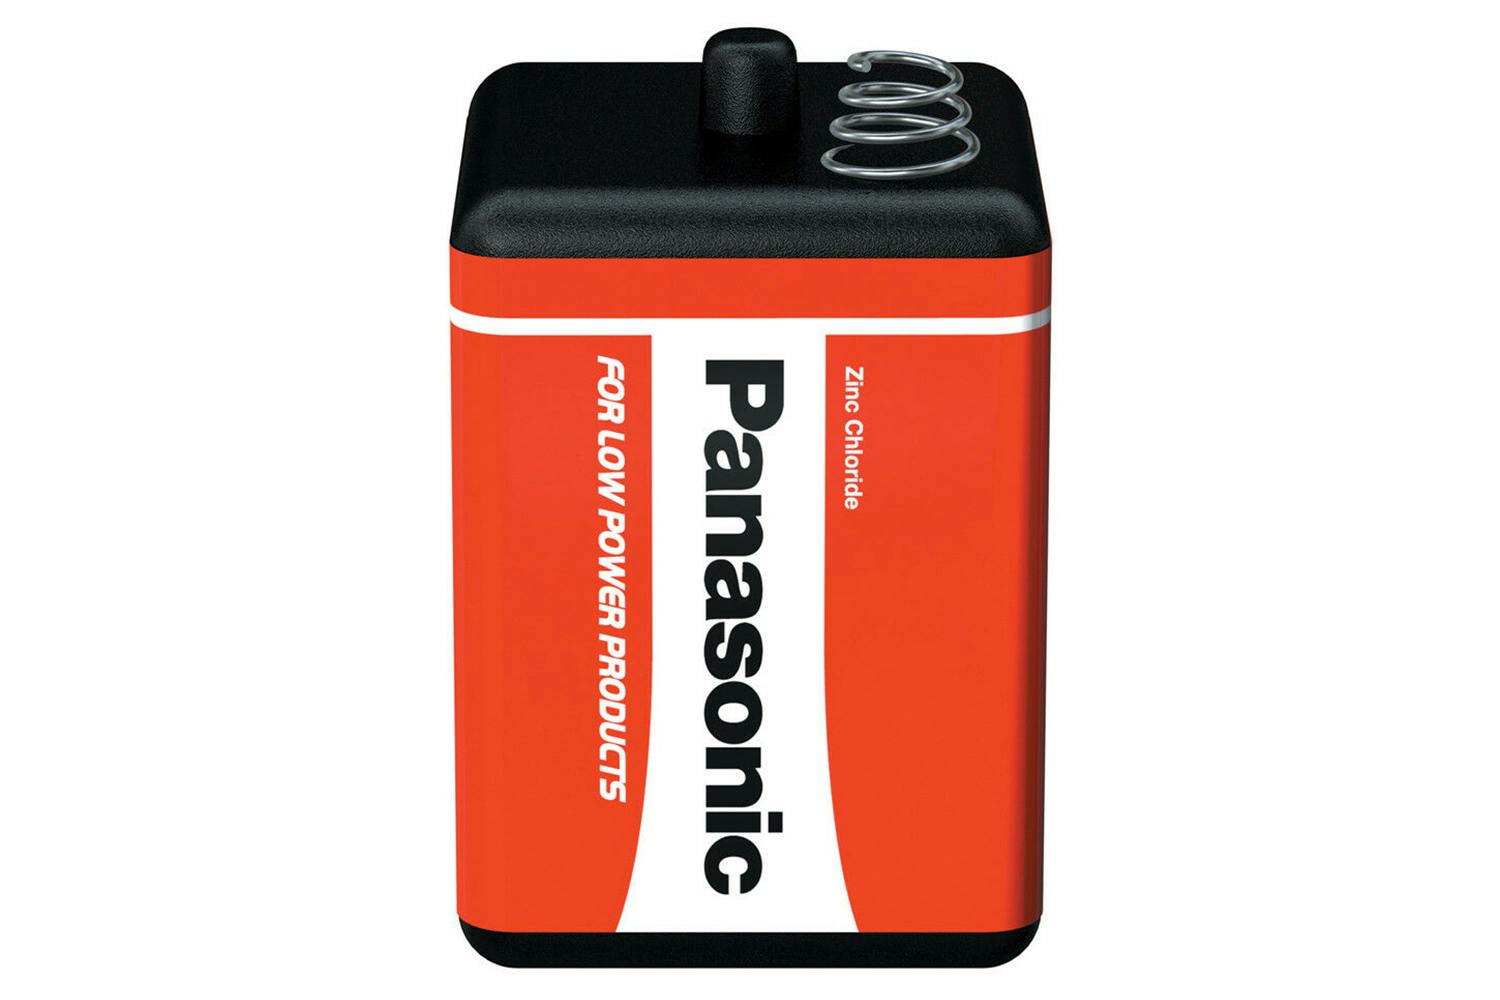 Panasonic 6V Zinc Chloride Battery with Spring